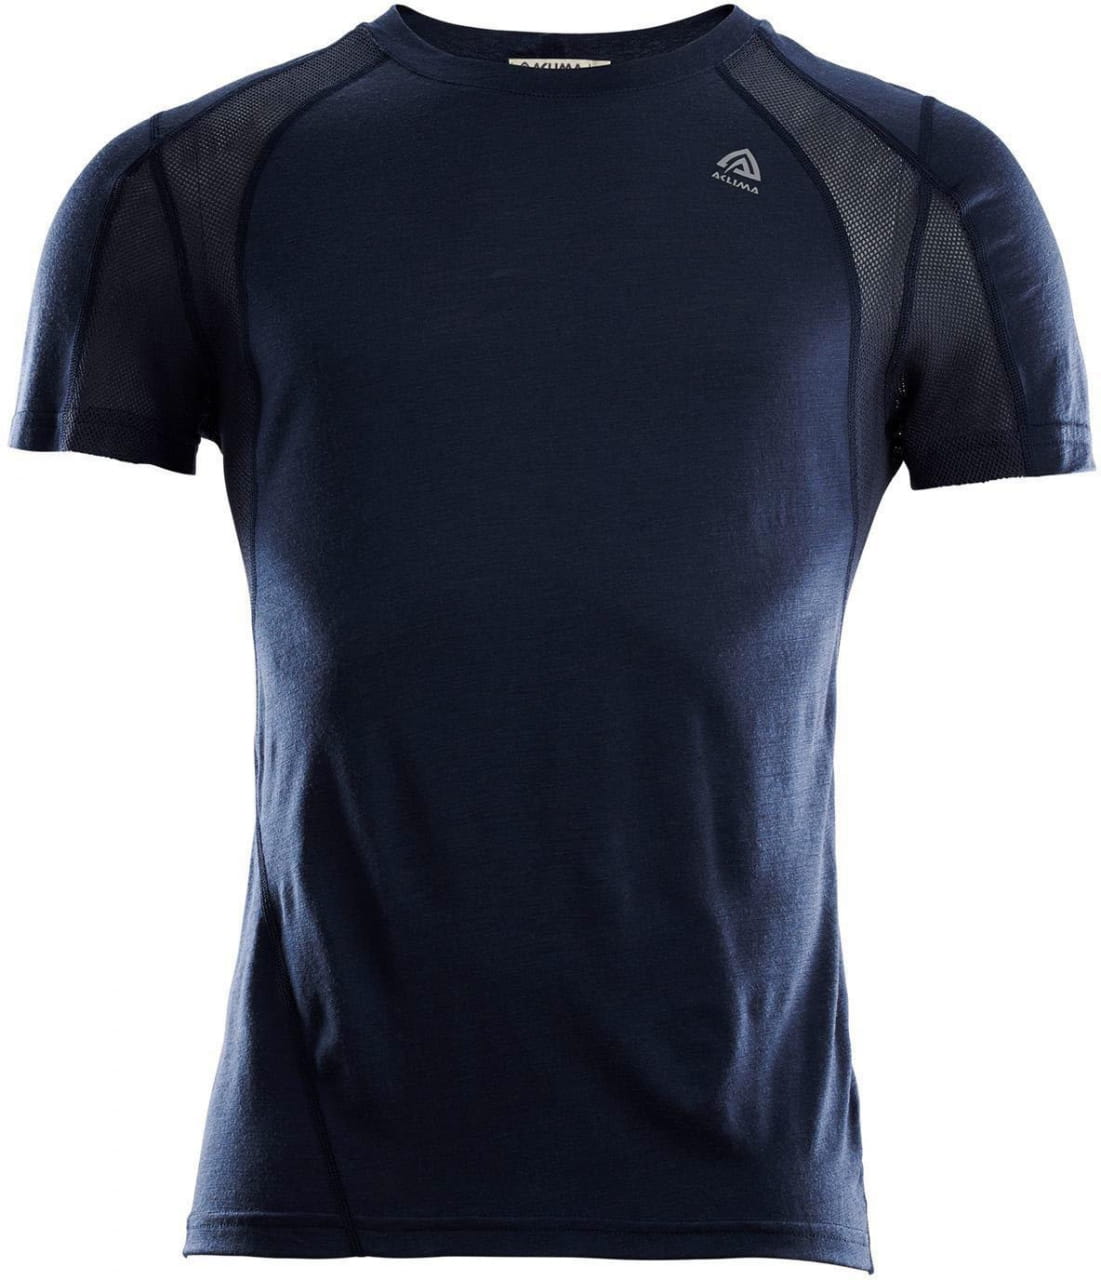 Sporthemd für Männer Aclima LightWool Sports Shirt